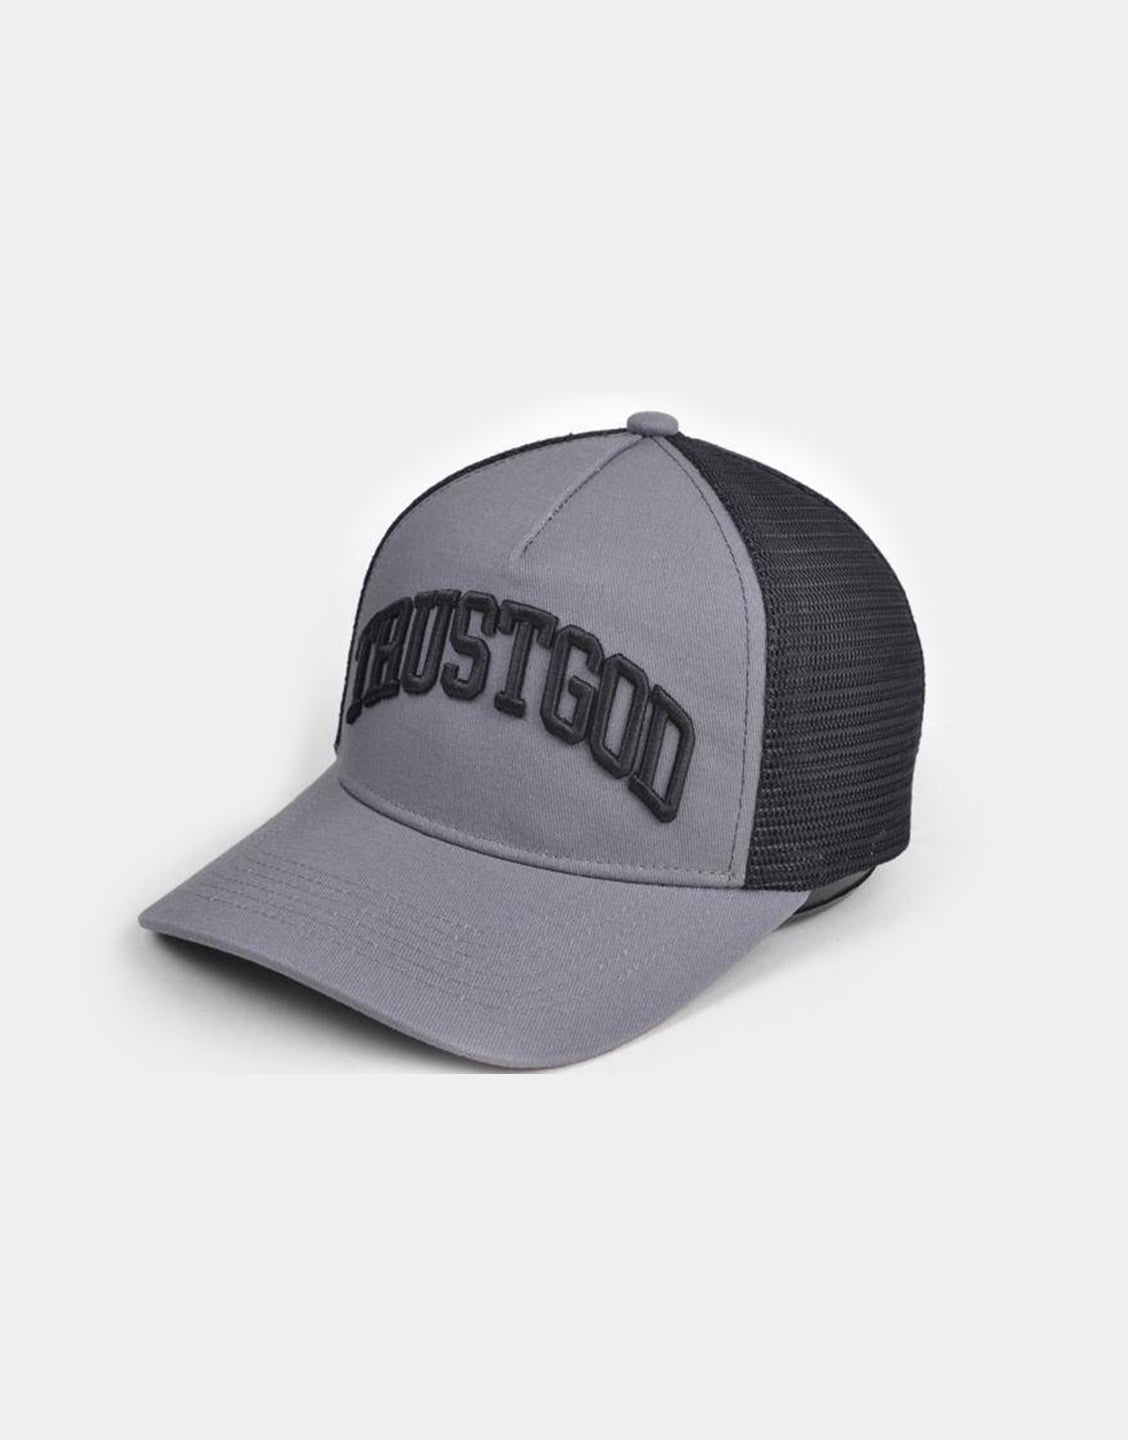 Trust God Premium Trucker Hat - Gray/Black - VOTC Clothing